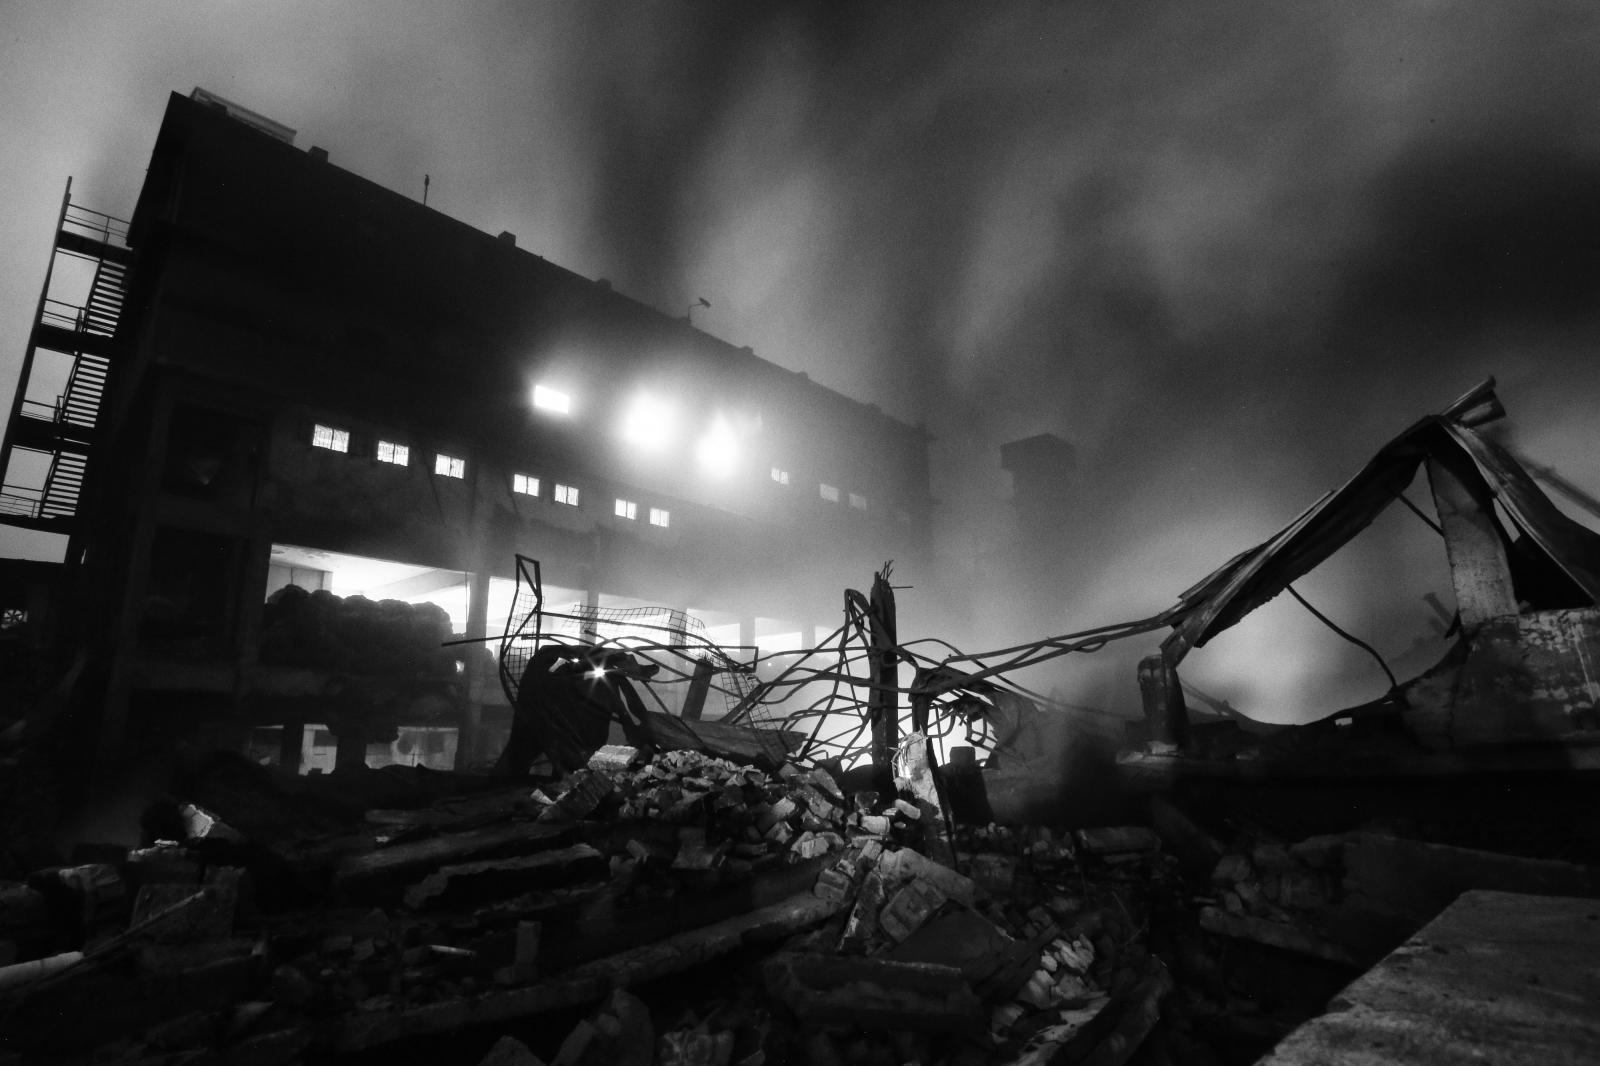 The fire spread across the fact...Bangladesh, September 10, 2016.